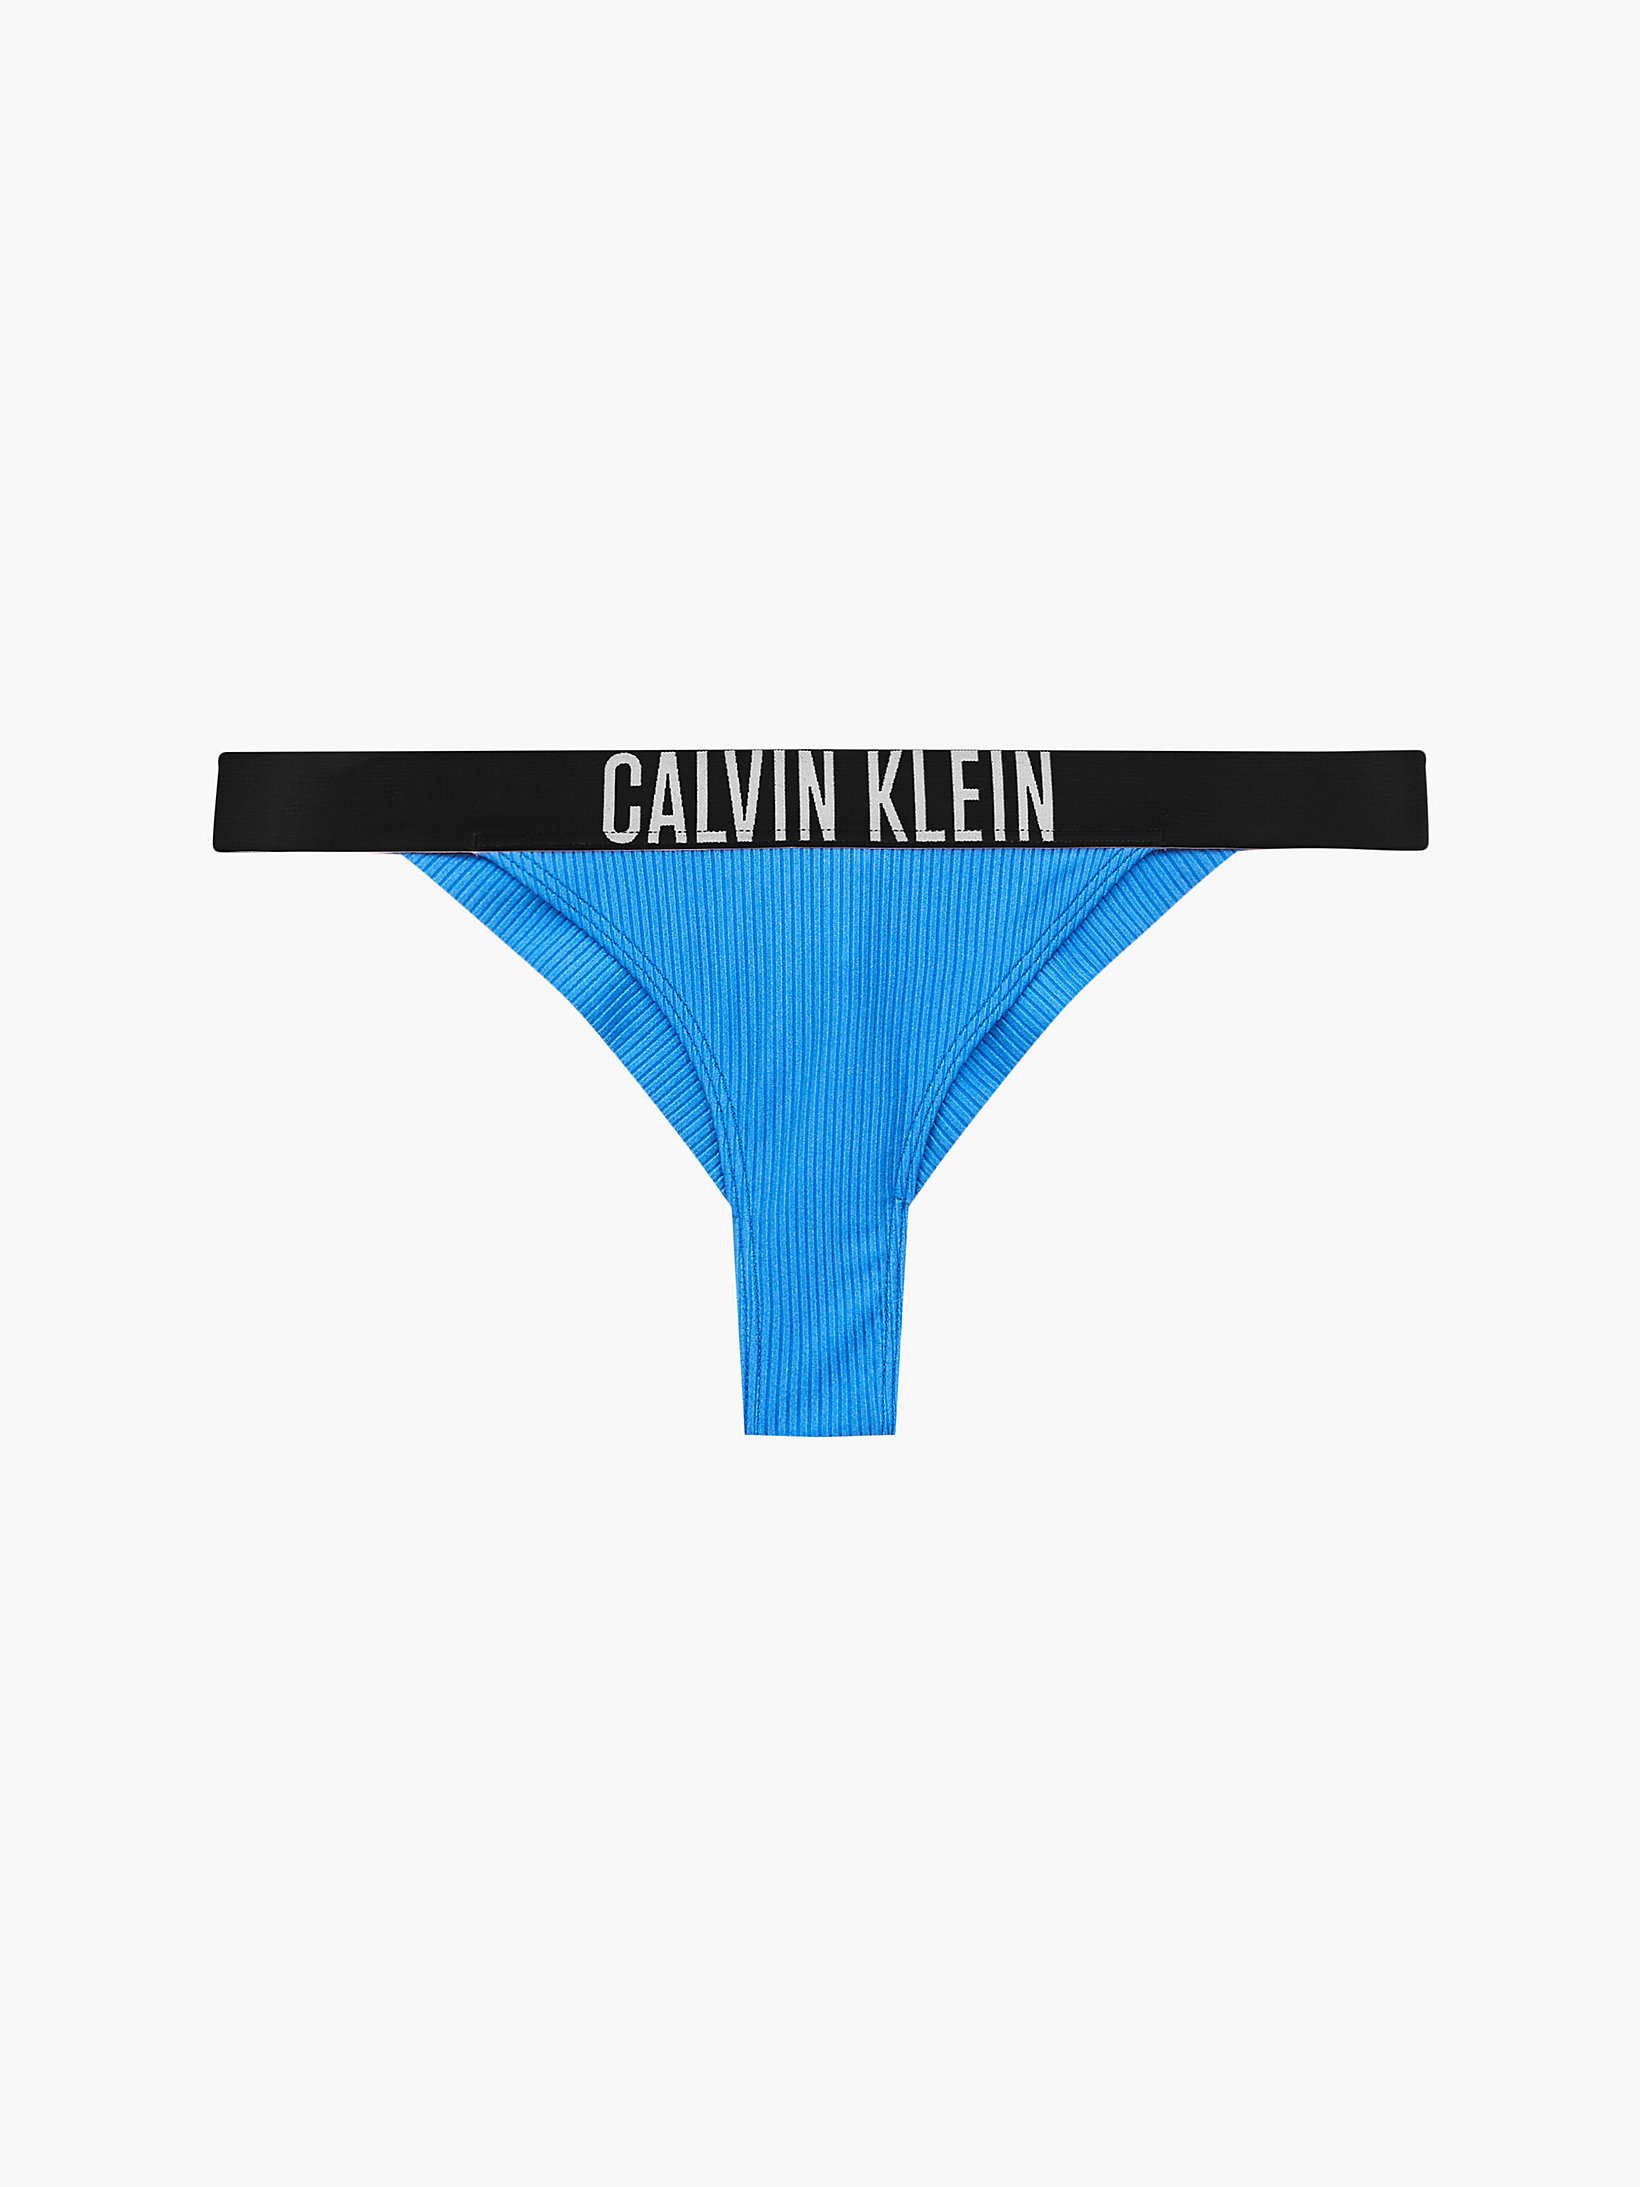 Bas De Bikini Brésilien - Intense Power > Corrib River Blue > undefined femmes > Calvin Klein